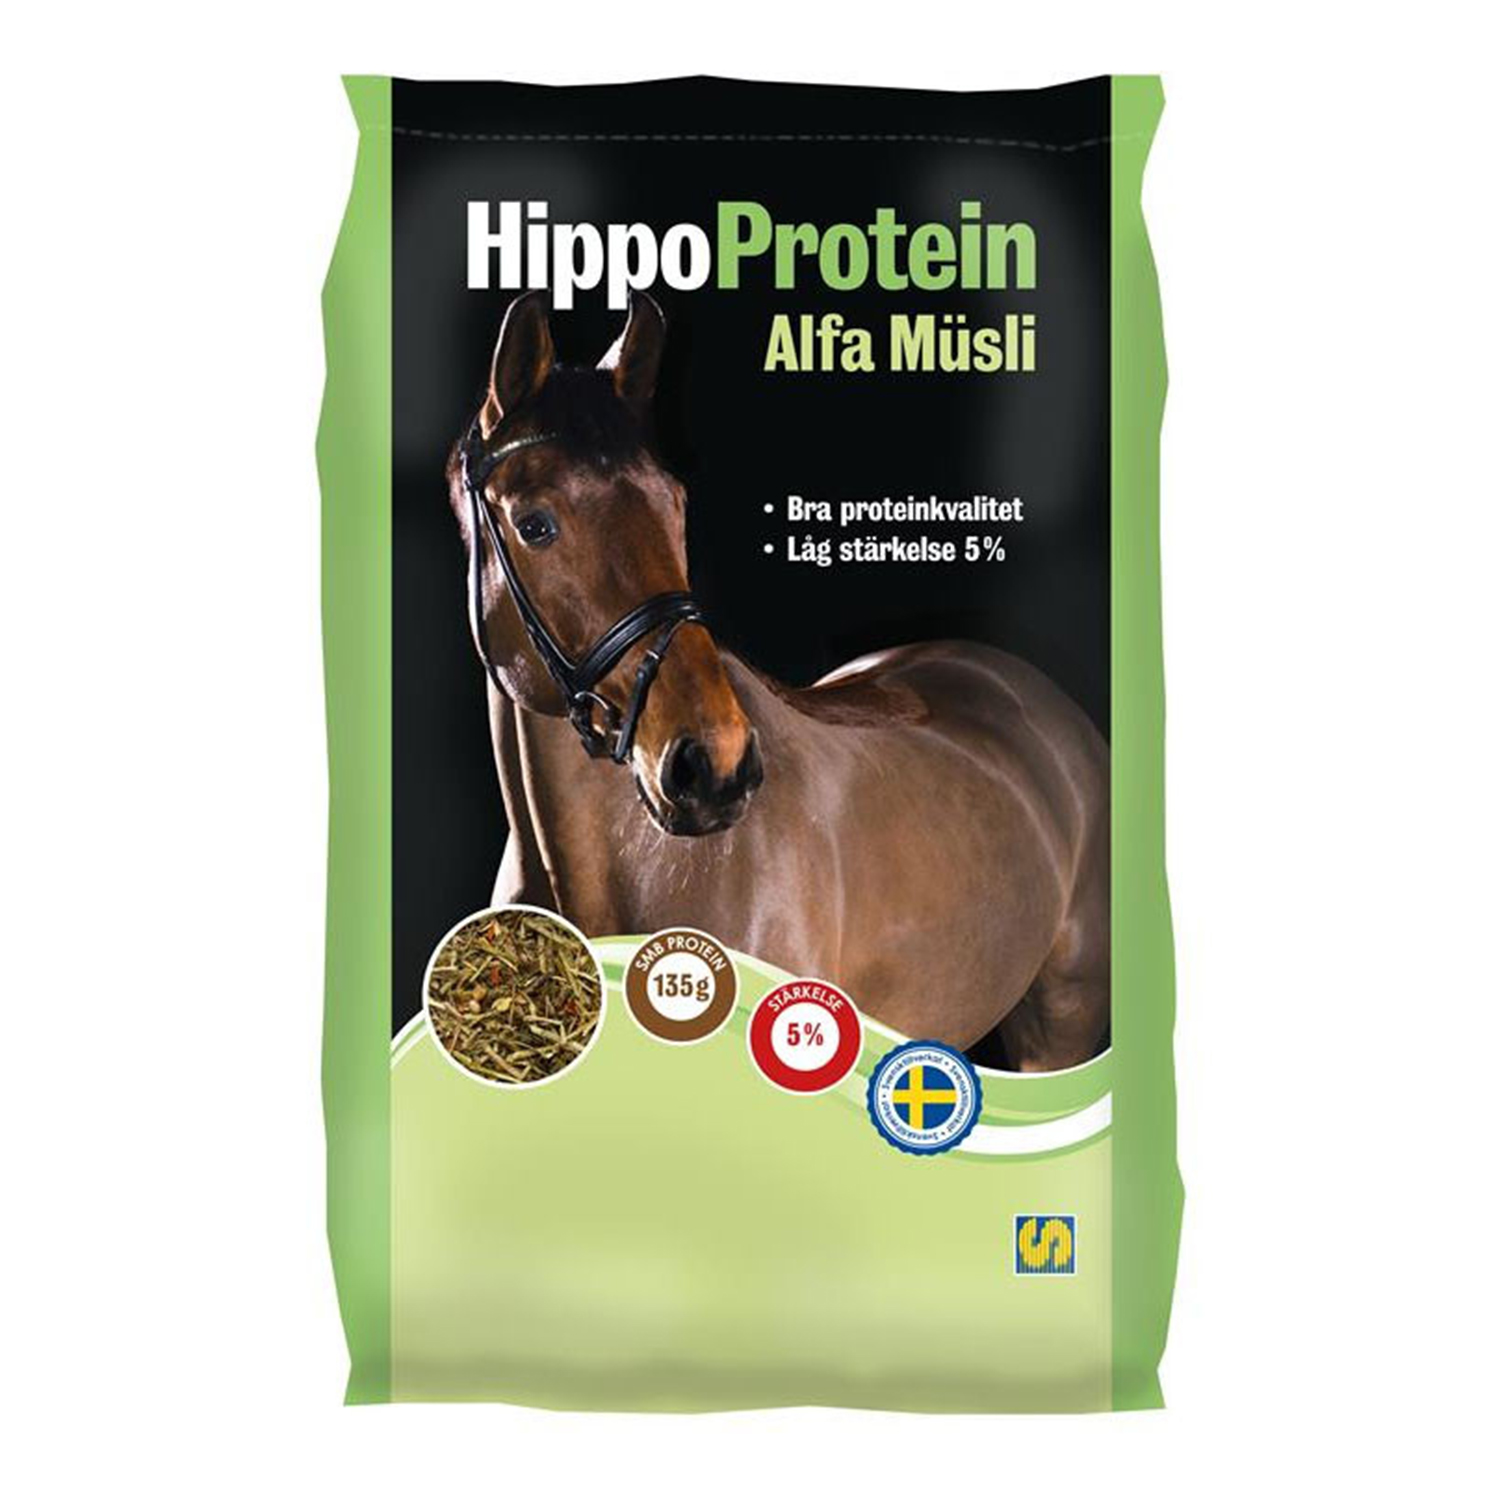 Hippo protein alfa müsli 20kg